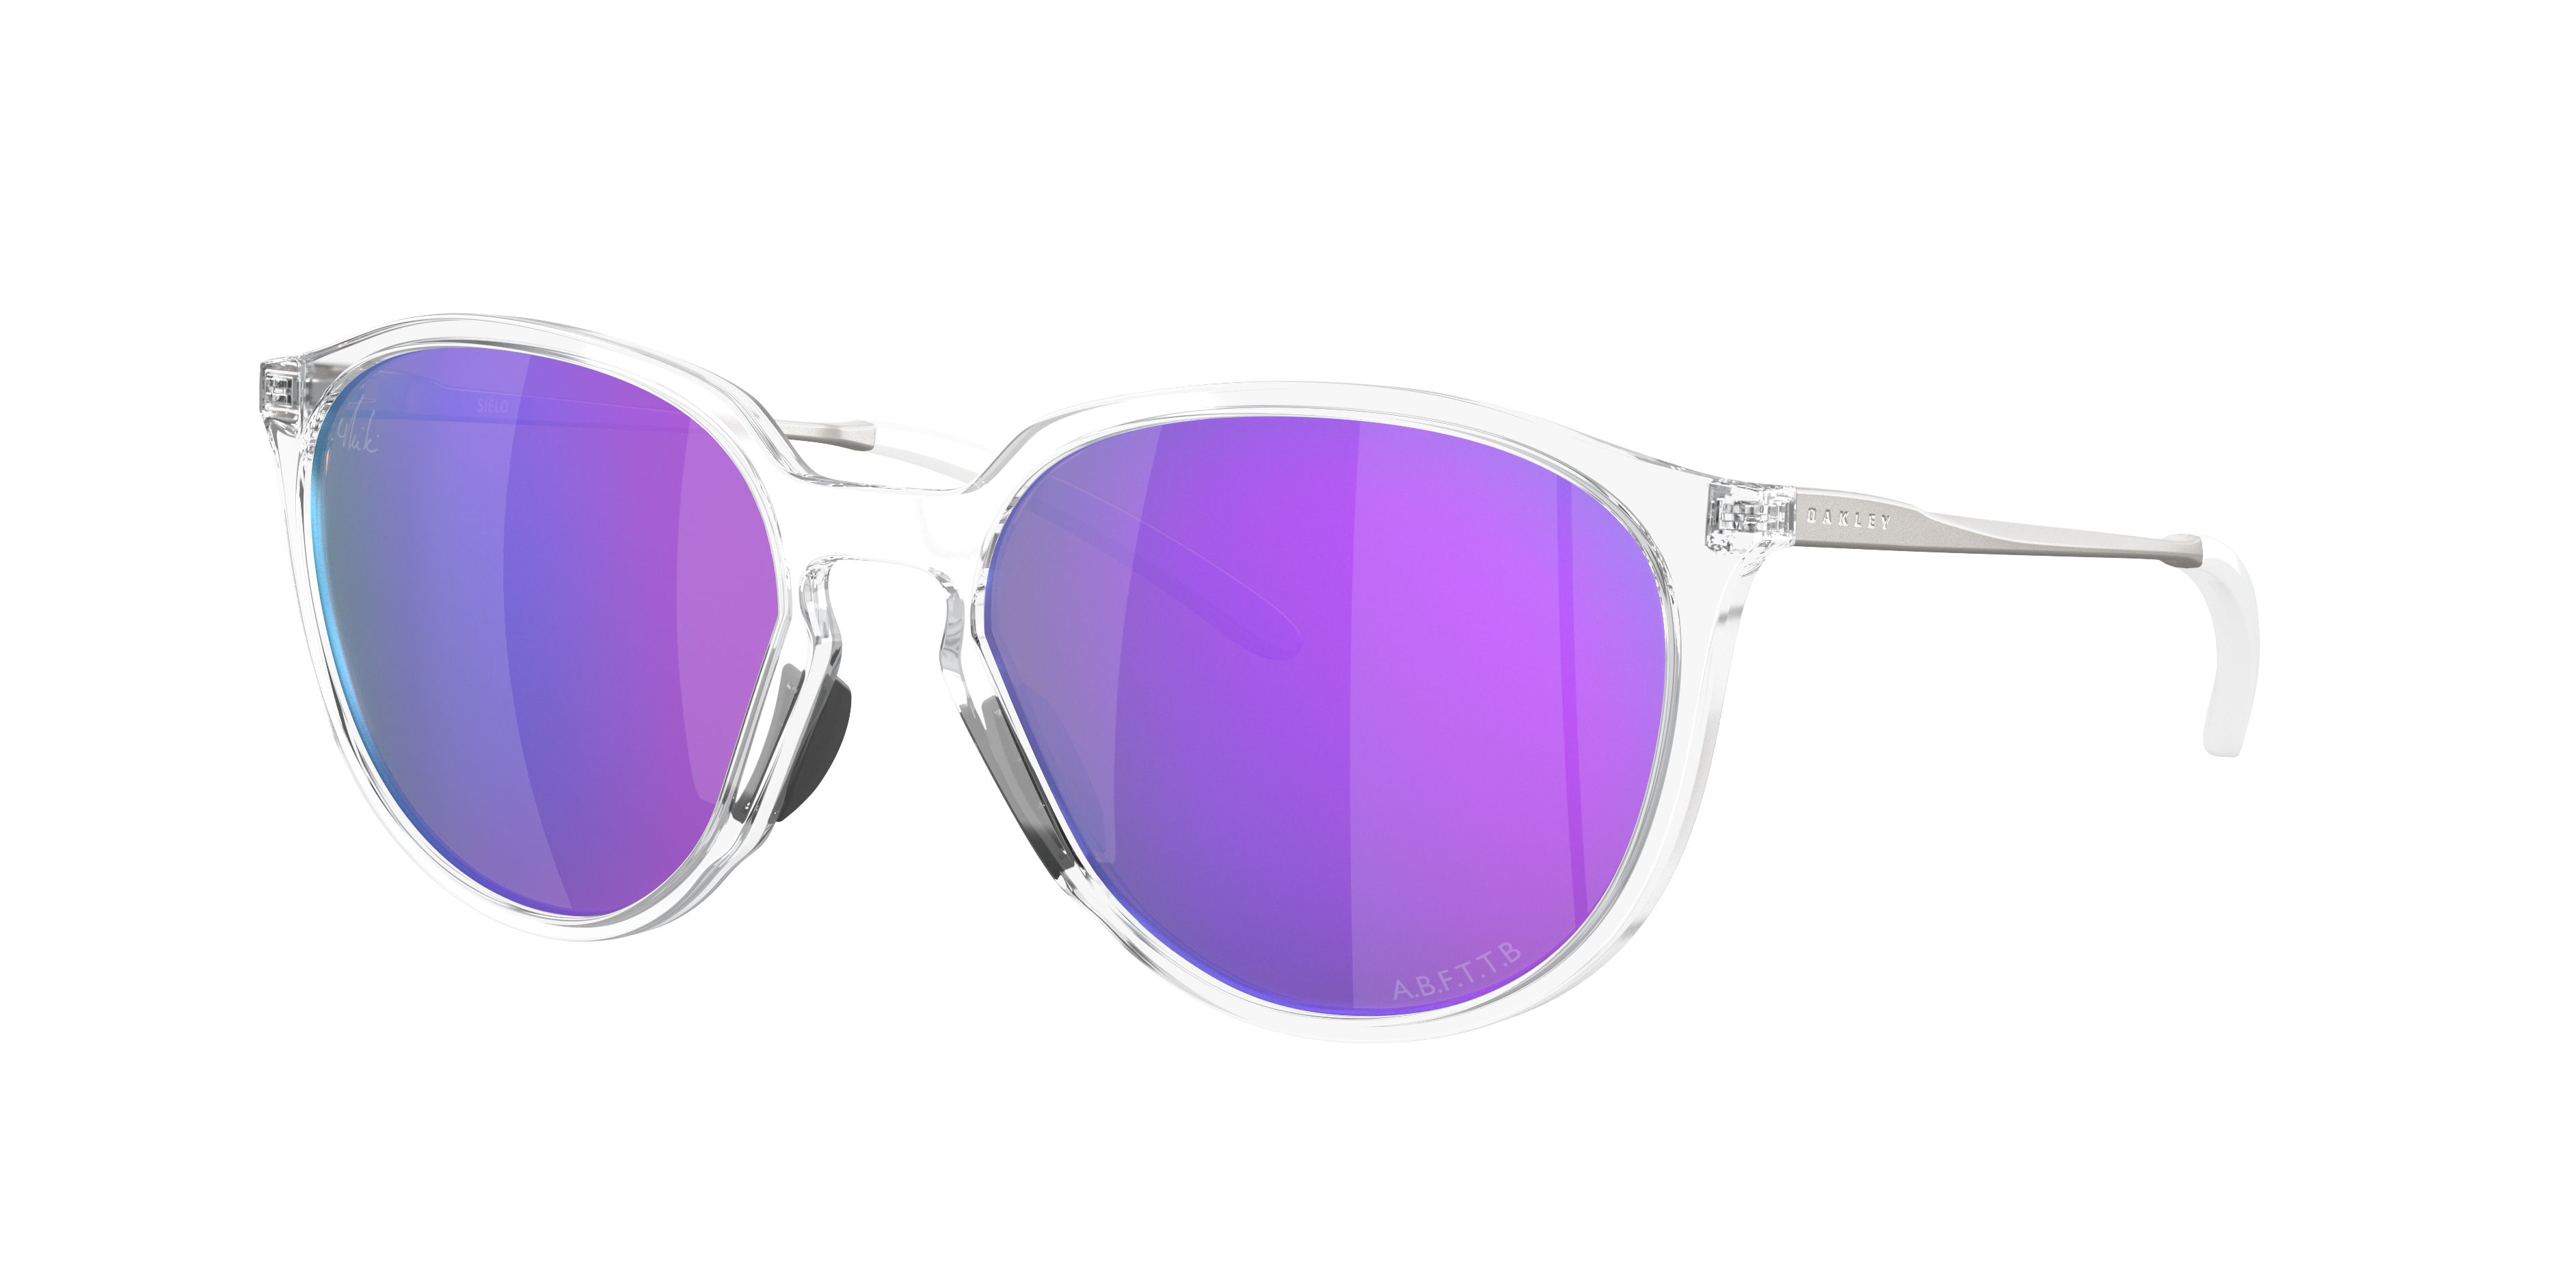 OAKLEY OO9288 Mikaela Shiffrin Signature Series Sielo Cromo Pulido - Gafas  de Sol femenino, lentes Prizm Violet